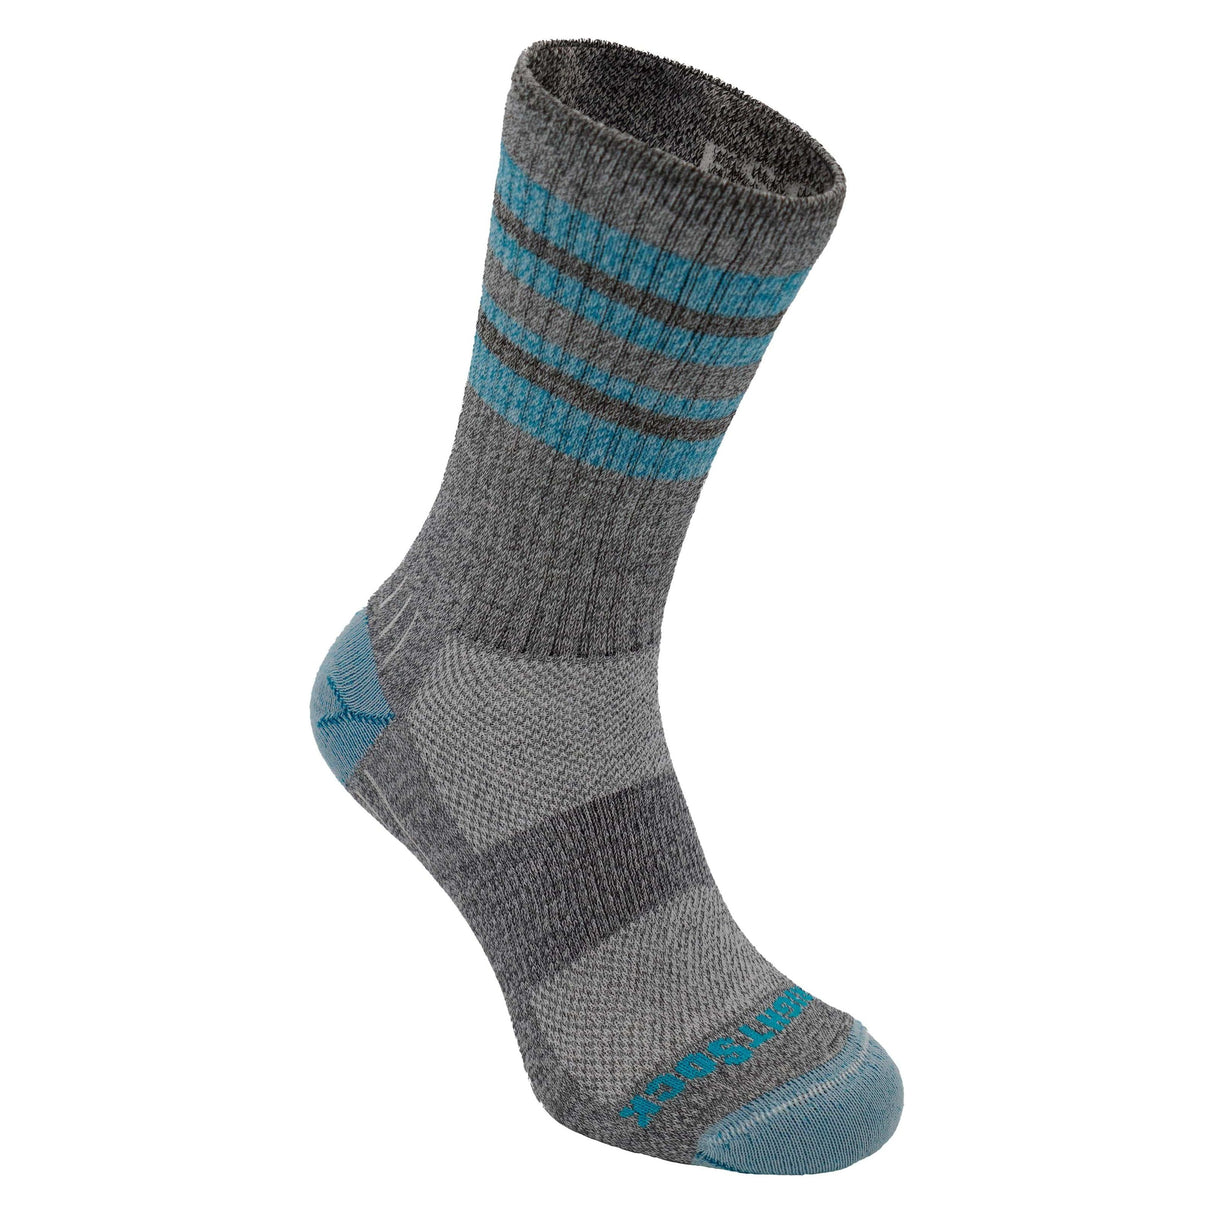 Wrightsock Escape Crew Anti-Blister Socks  -  Small / Turquoise Stripe